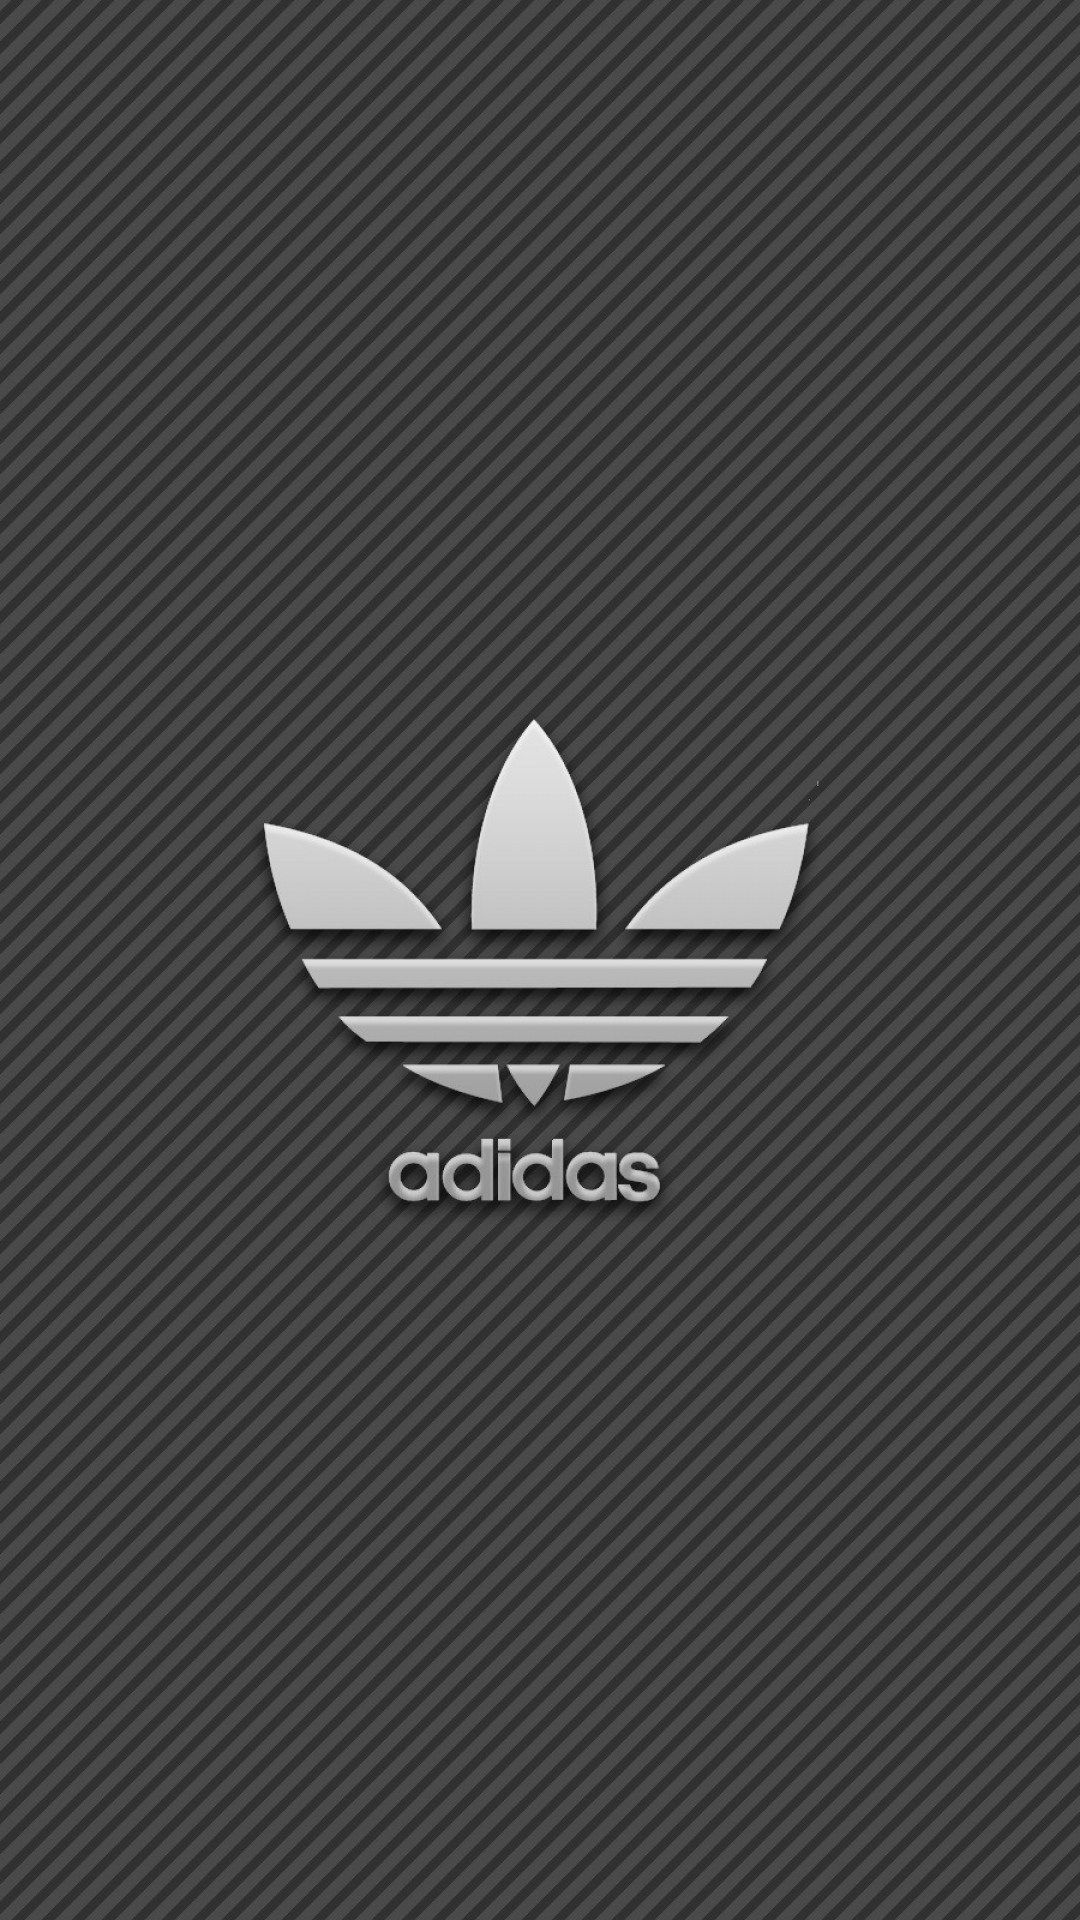 Adidas iPhone 6 wallpaper